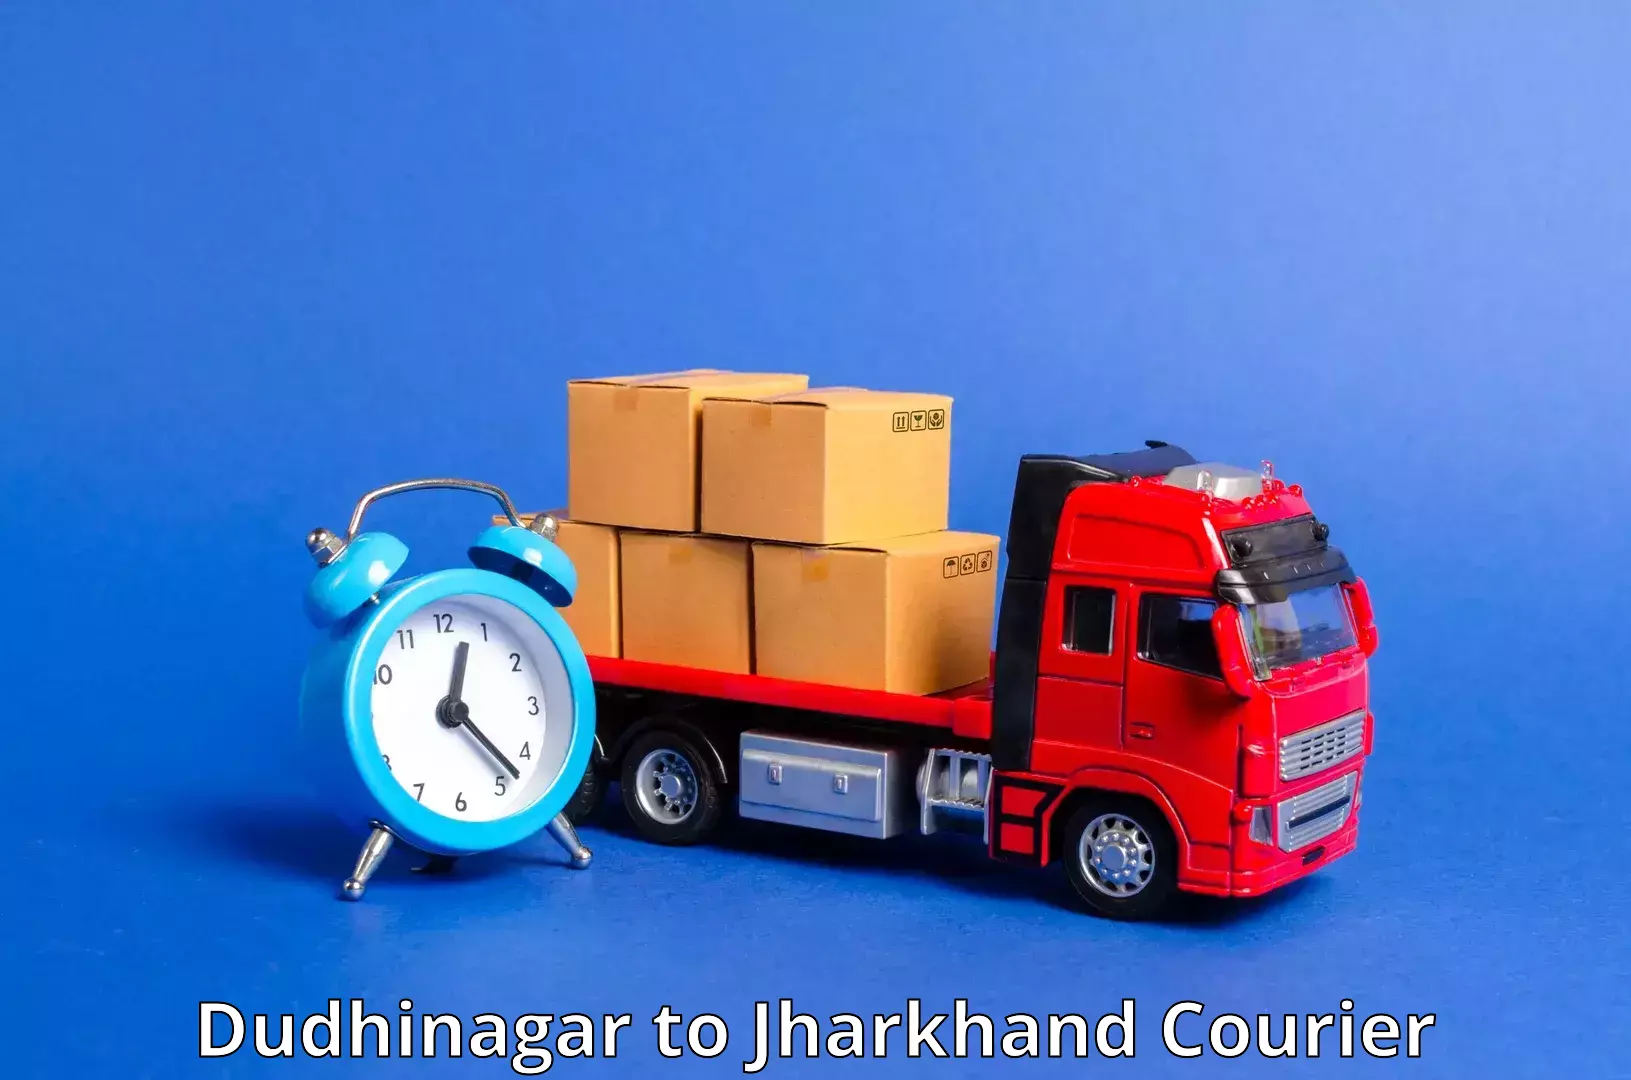 Multi-service courier options Dudhinagar to Hazaribagh